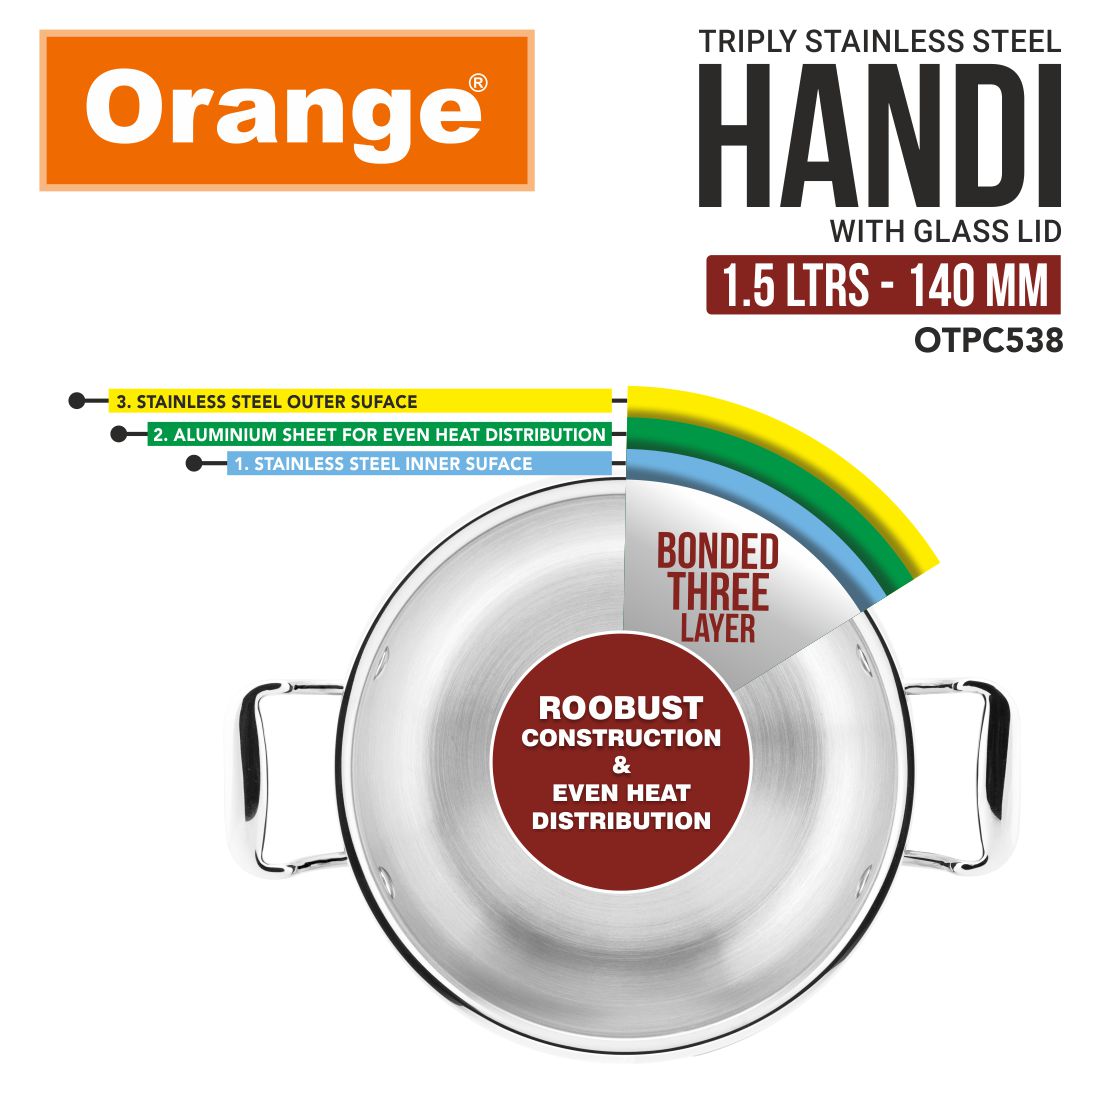 Orange Stainless Steel Triply Cook & Serve Handi/Biryani Pot/Kadai